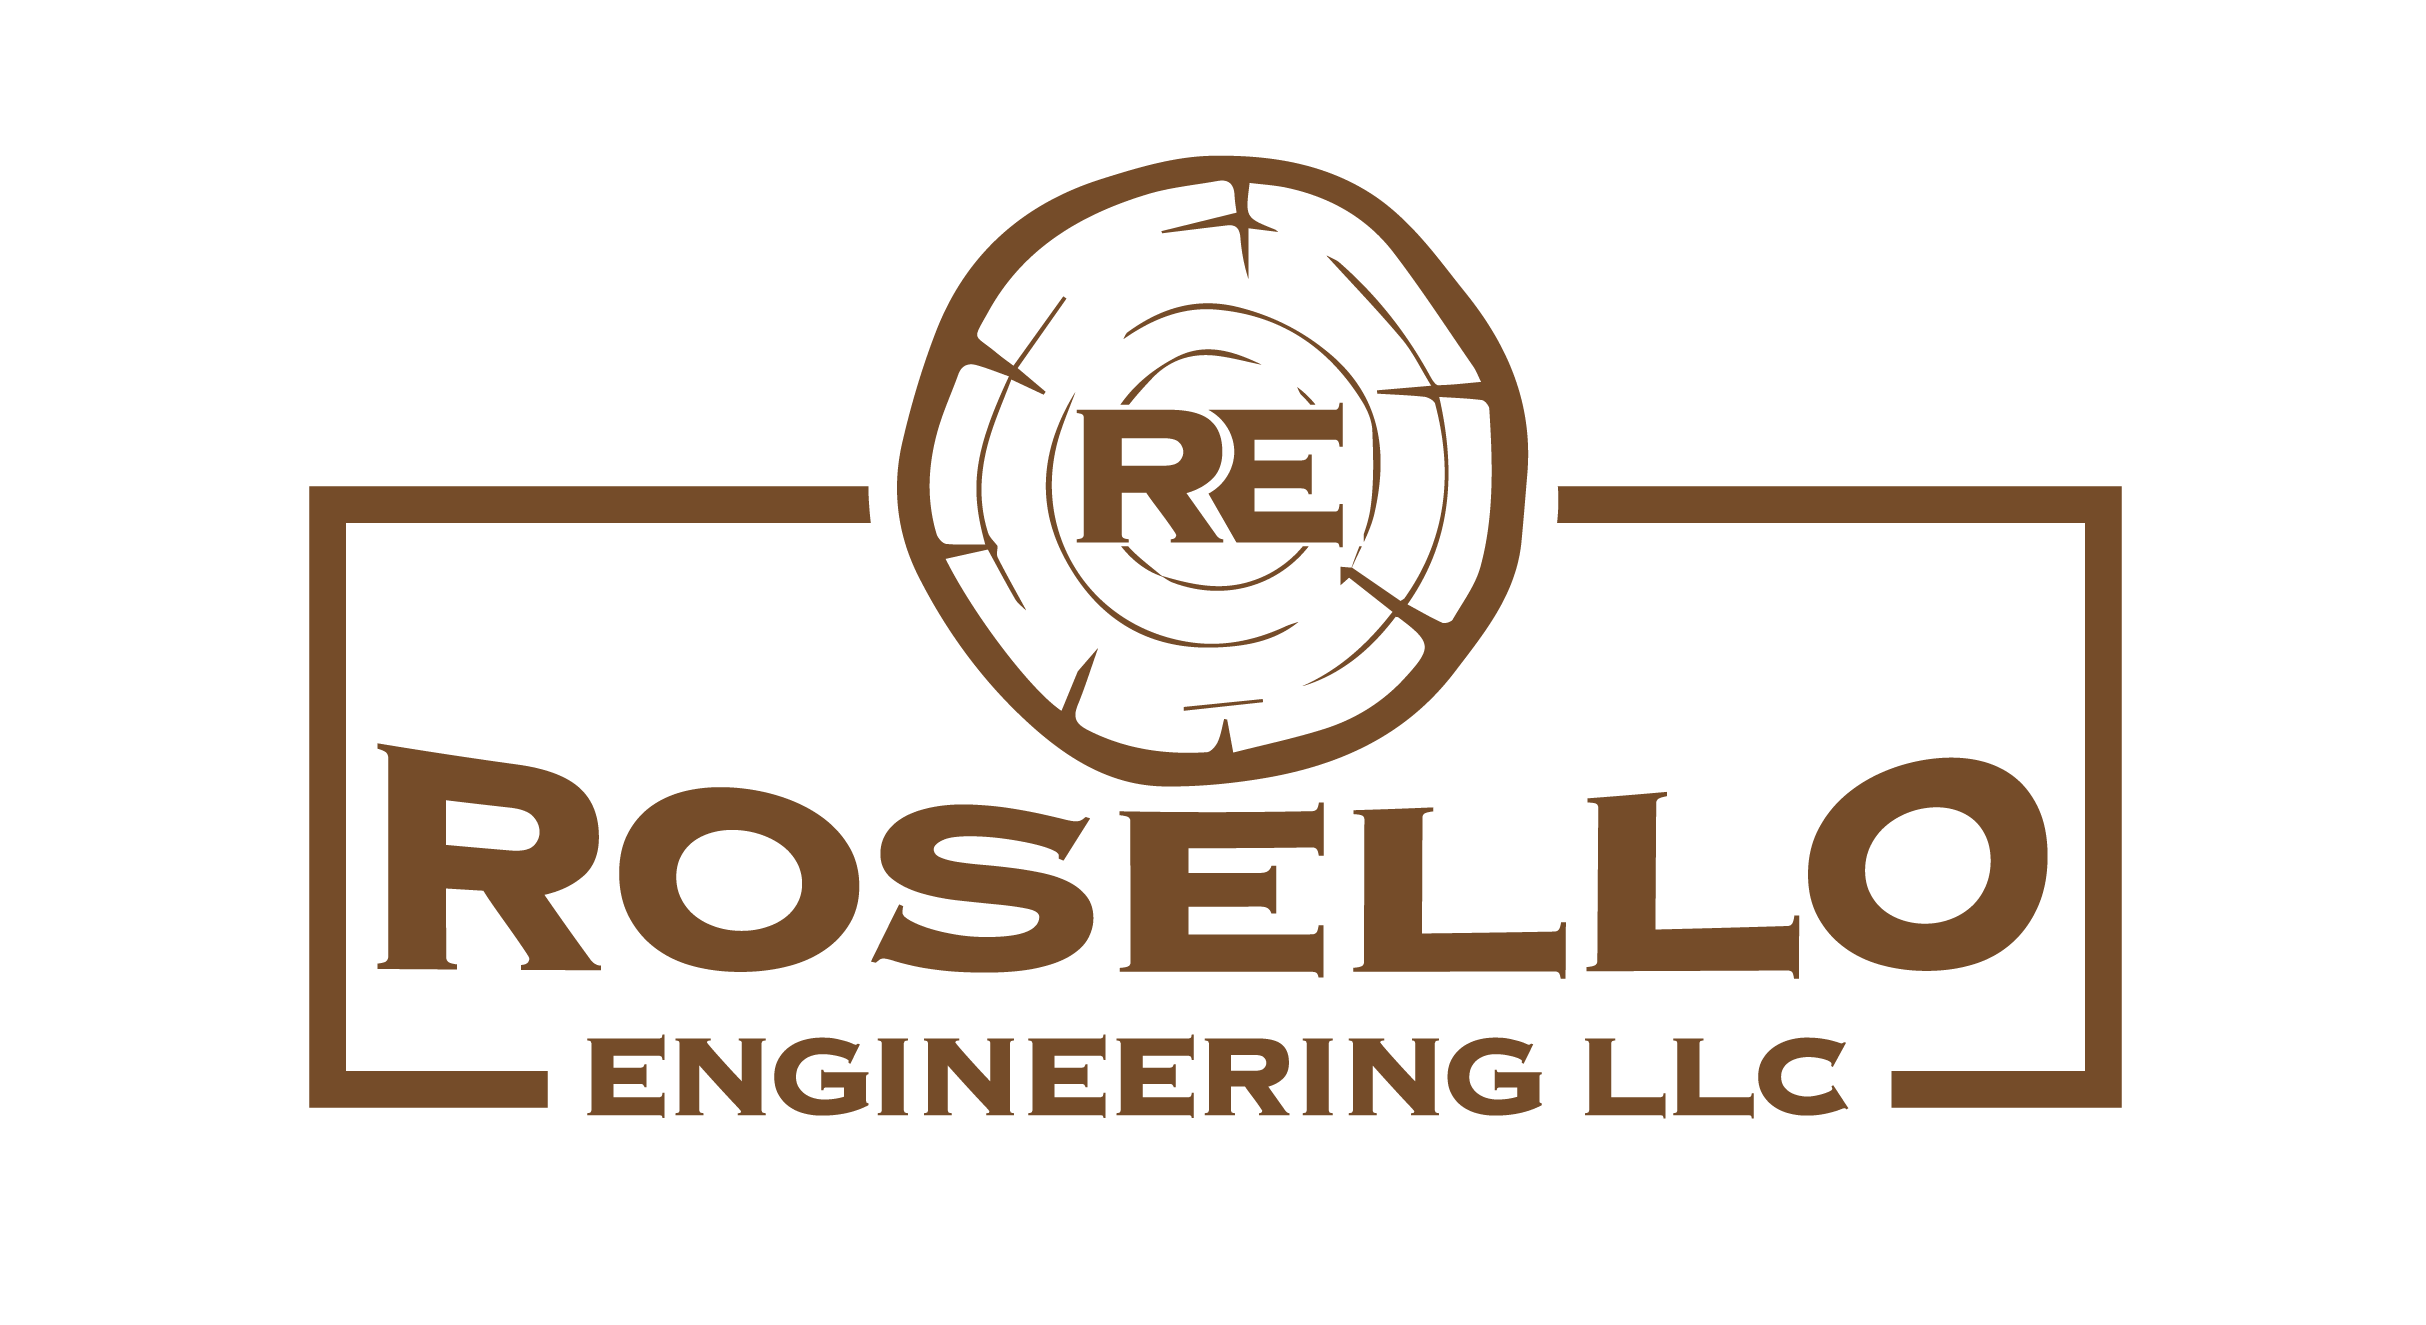 Rosello Engineering LLC